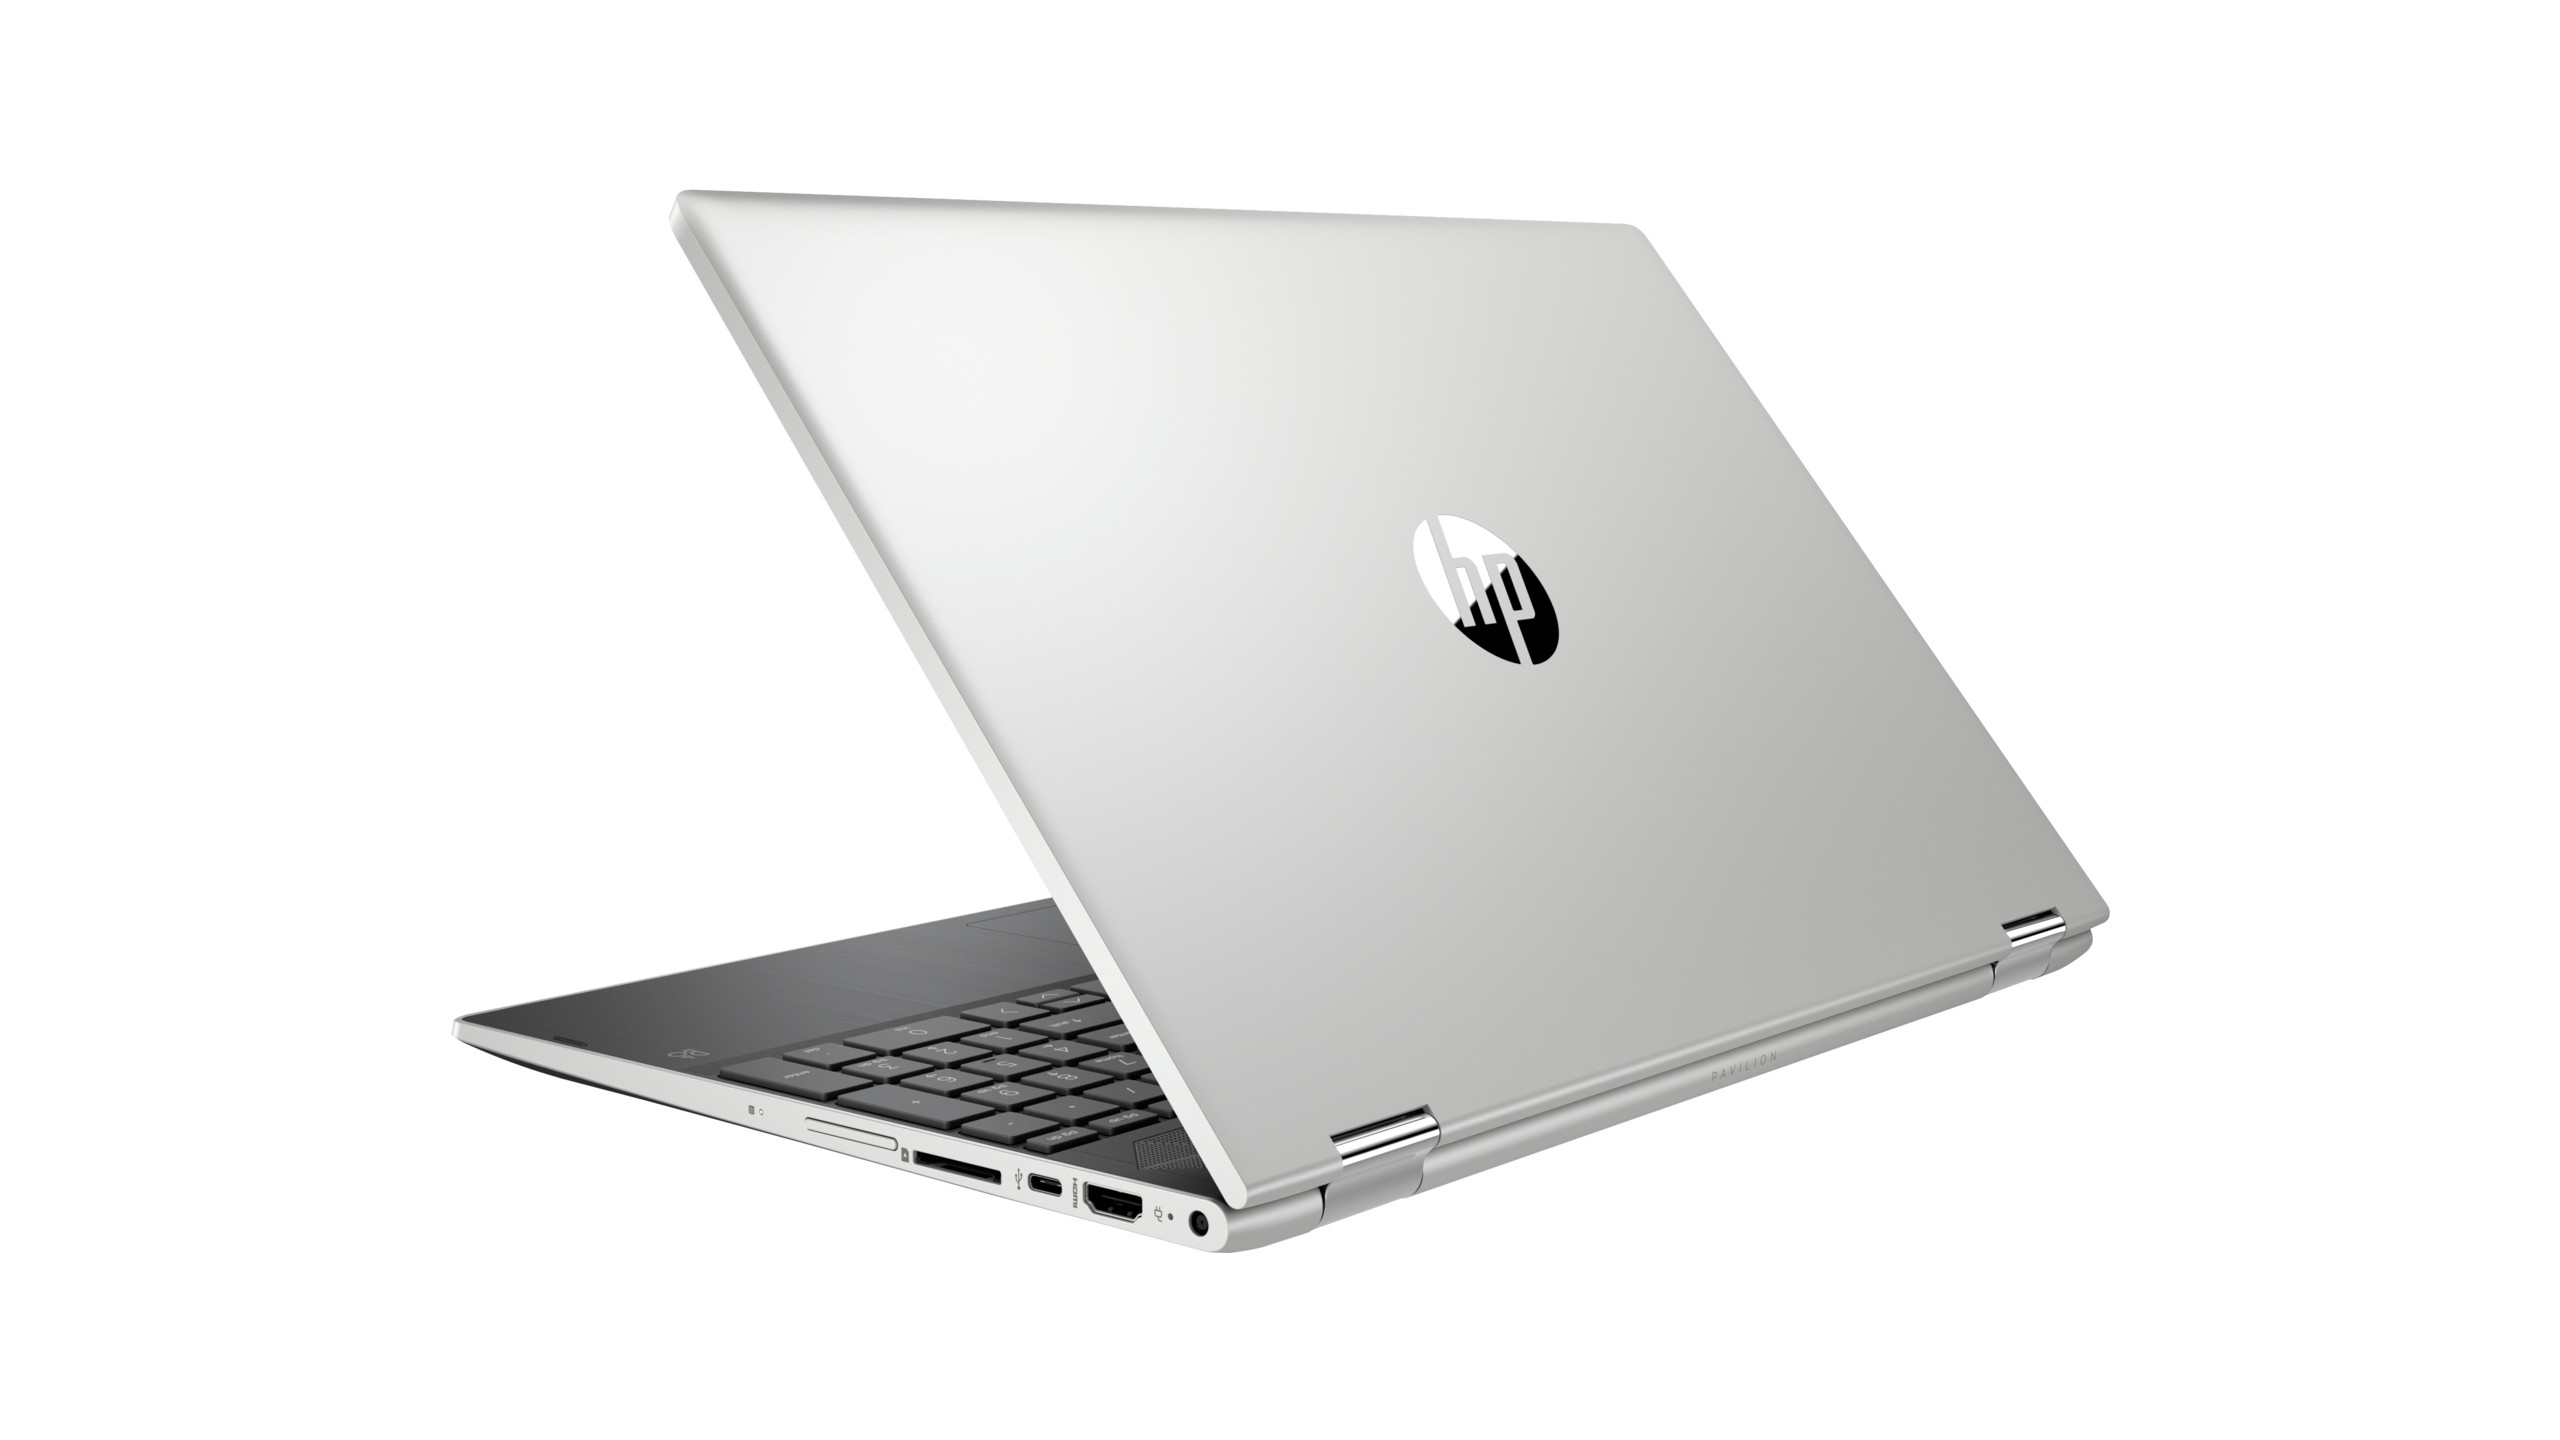 Laptop HP Pavilion x360 Pentium Gold 4415U 2.3GHz 4GB 500GB 15.6" ...